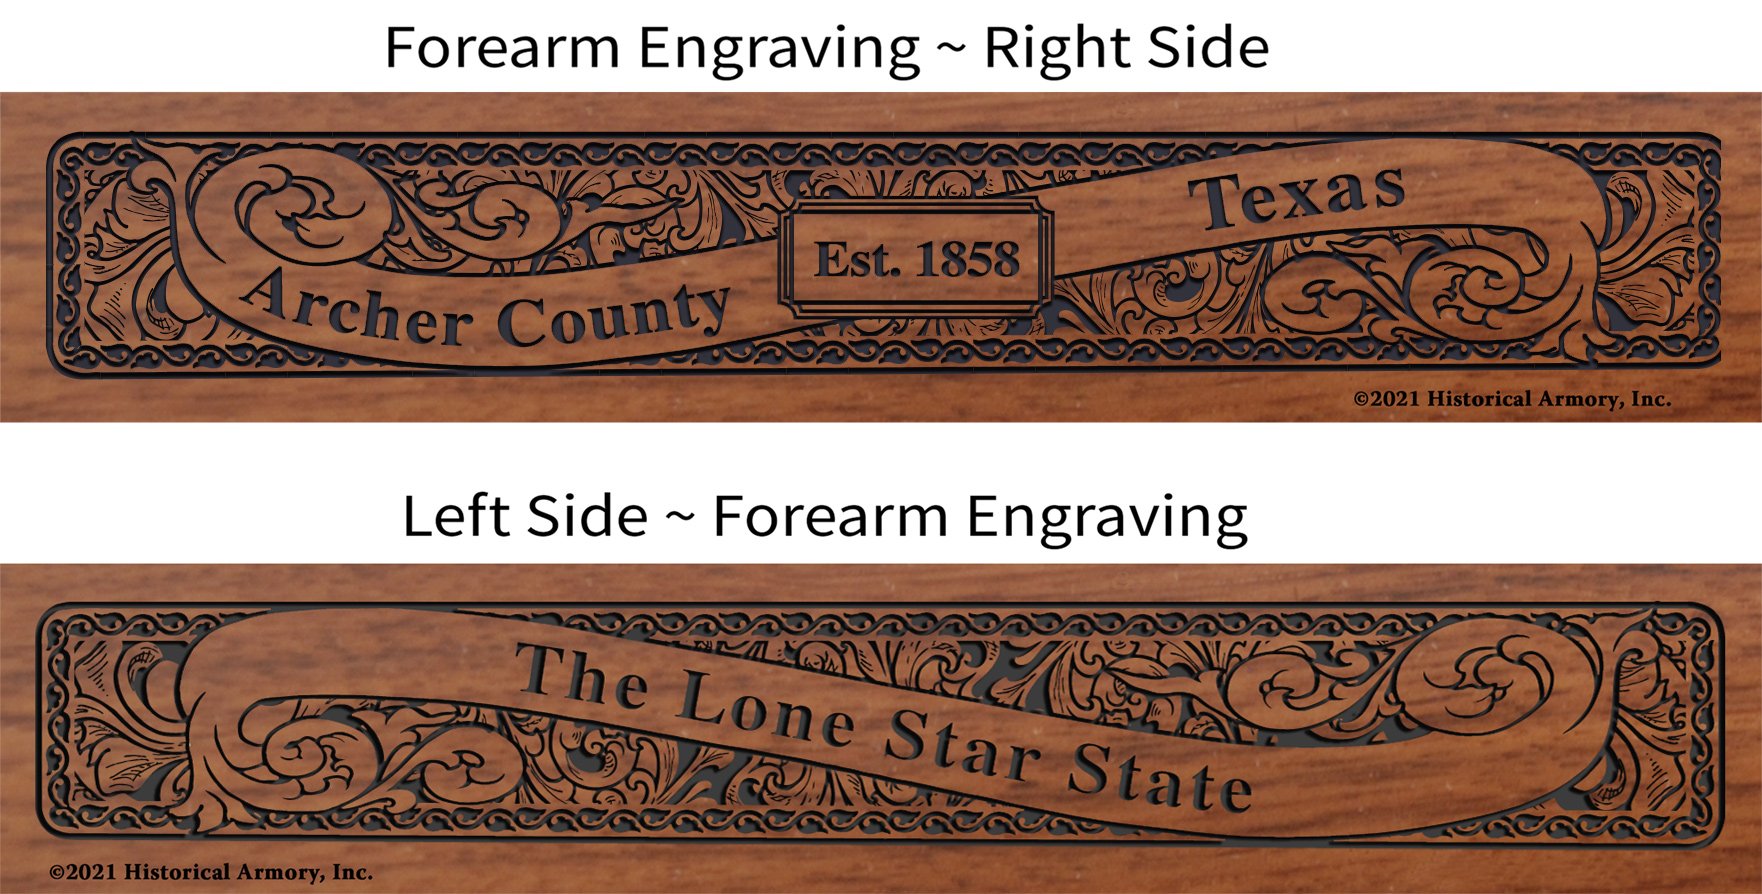 Archer County Texas Establishment and Motto History Engraved Rifle Forearm